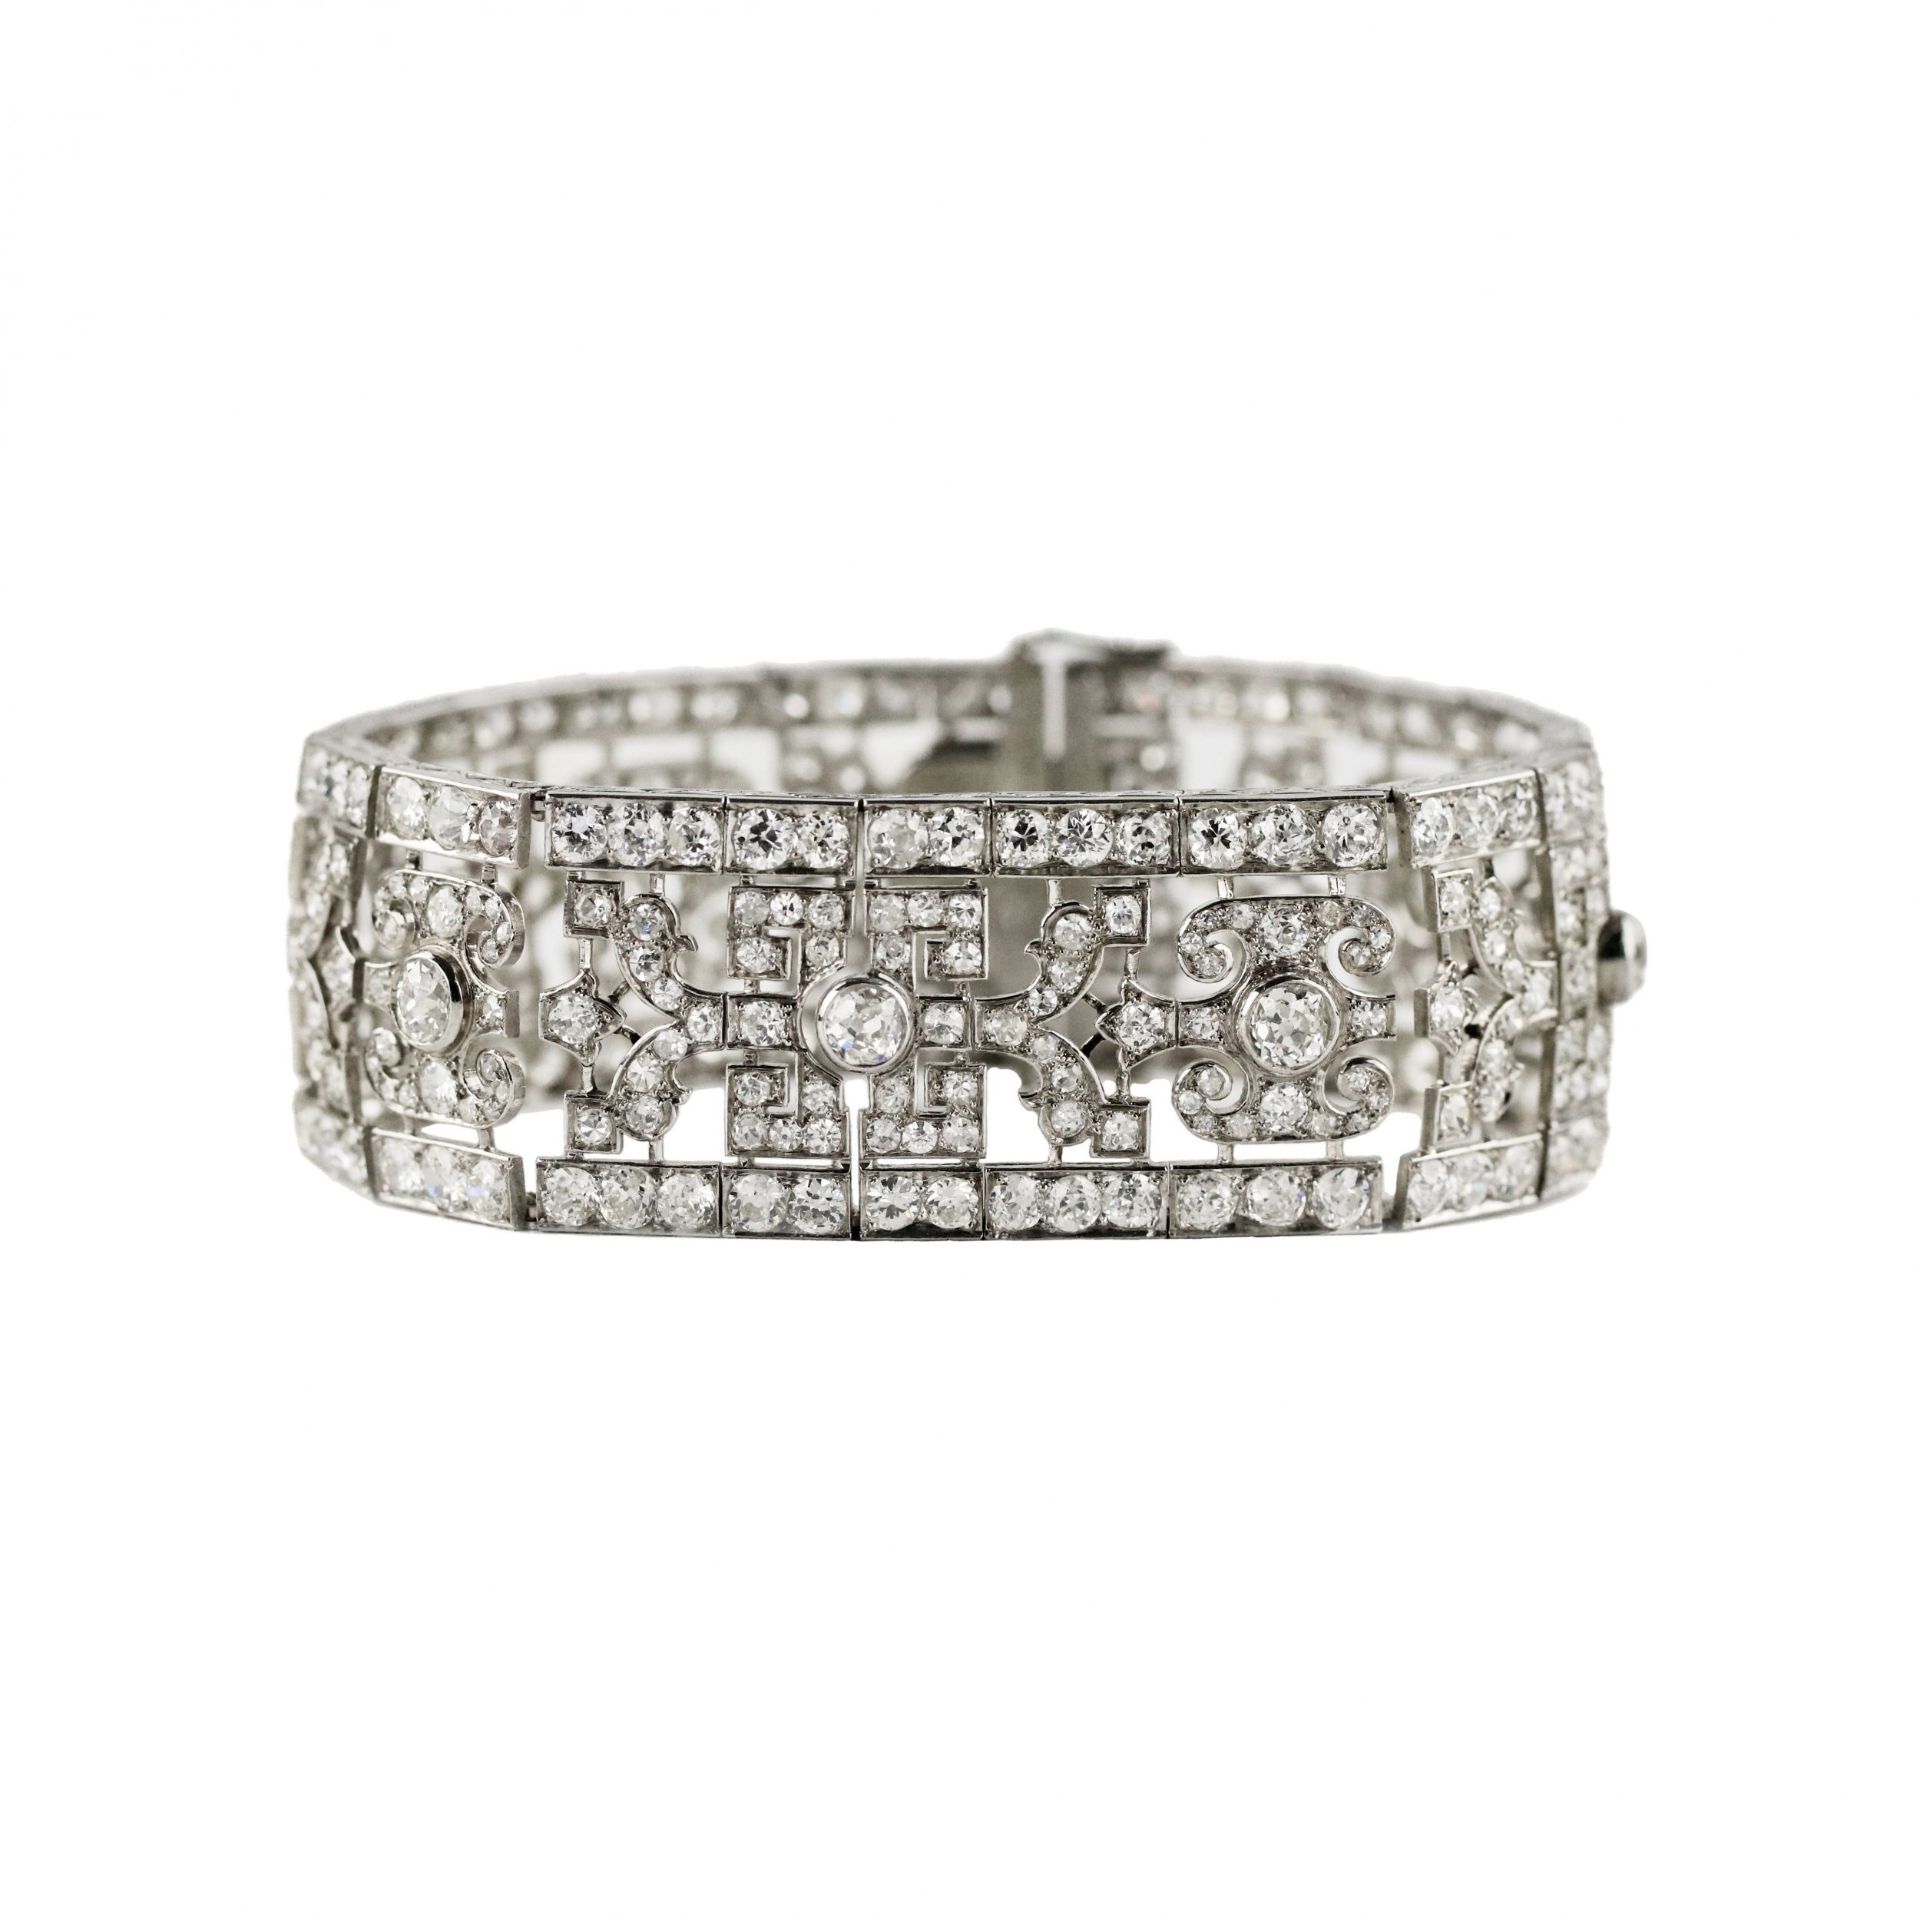 Platinum bracelet with diamonds, NARDI, Italy. In original case. - Image 4 of 9